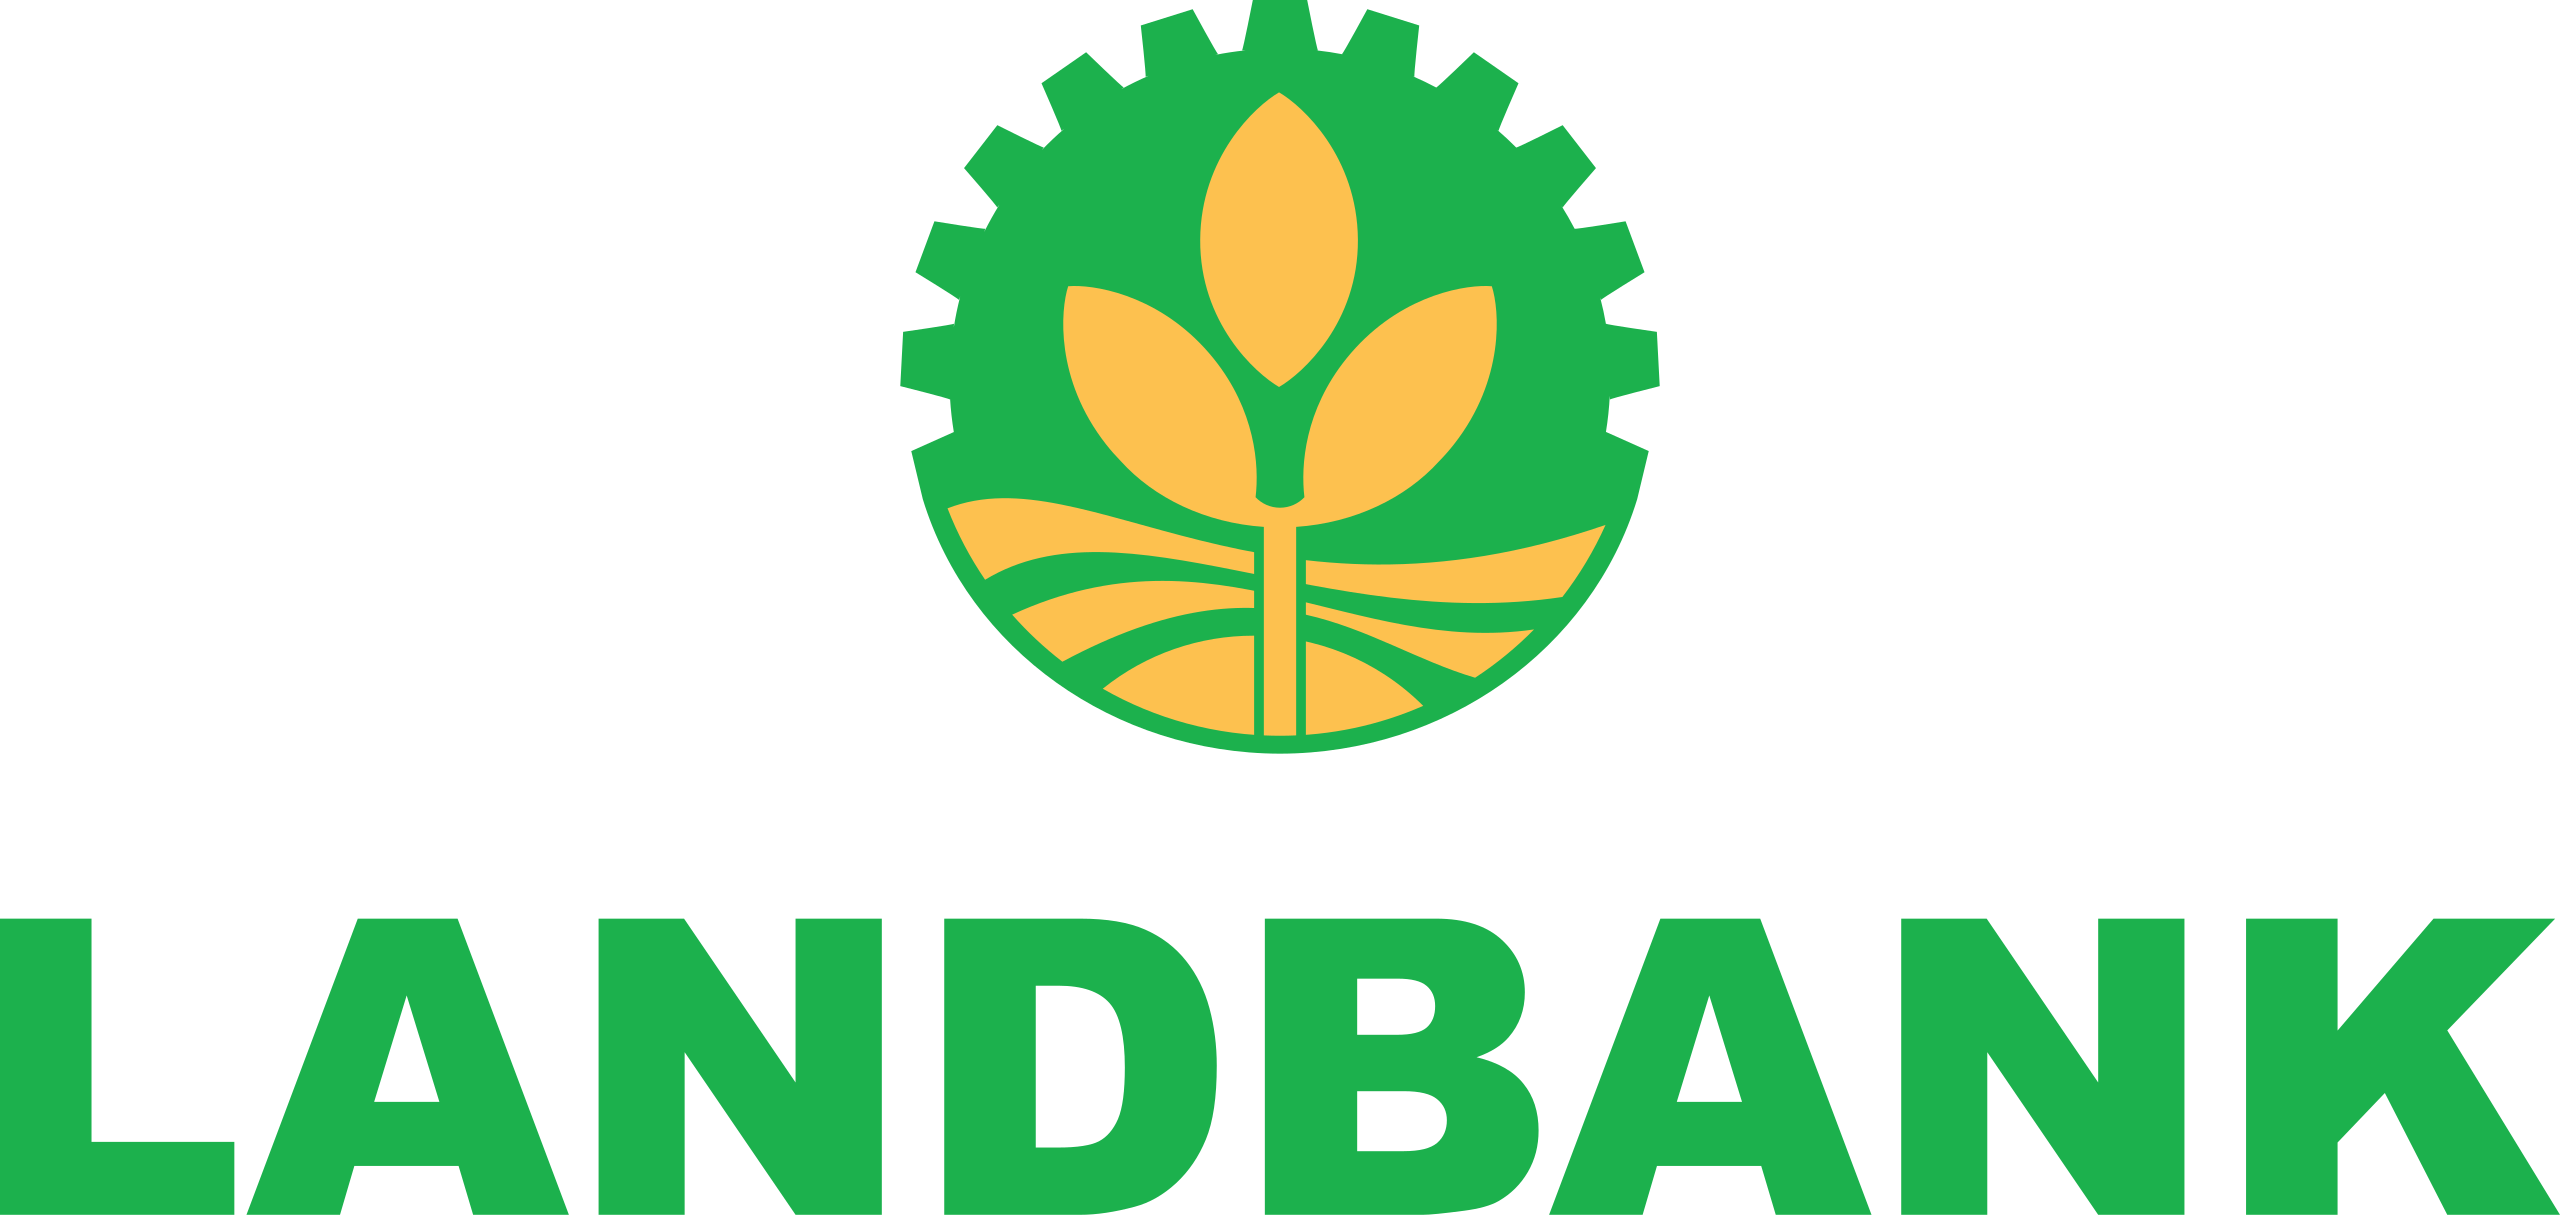 Land Bank of the Philippines (Landbank) logo